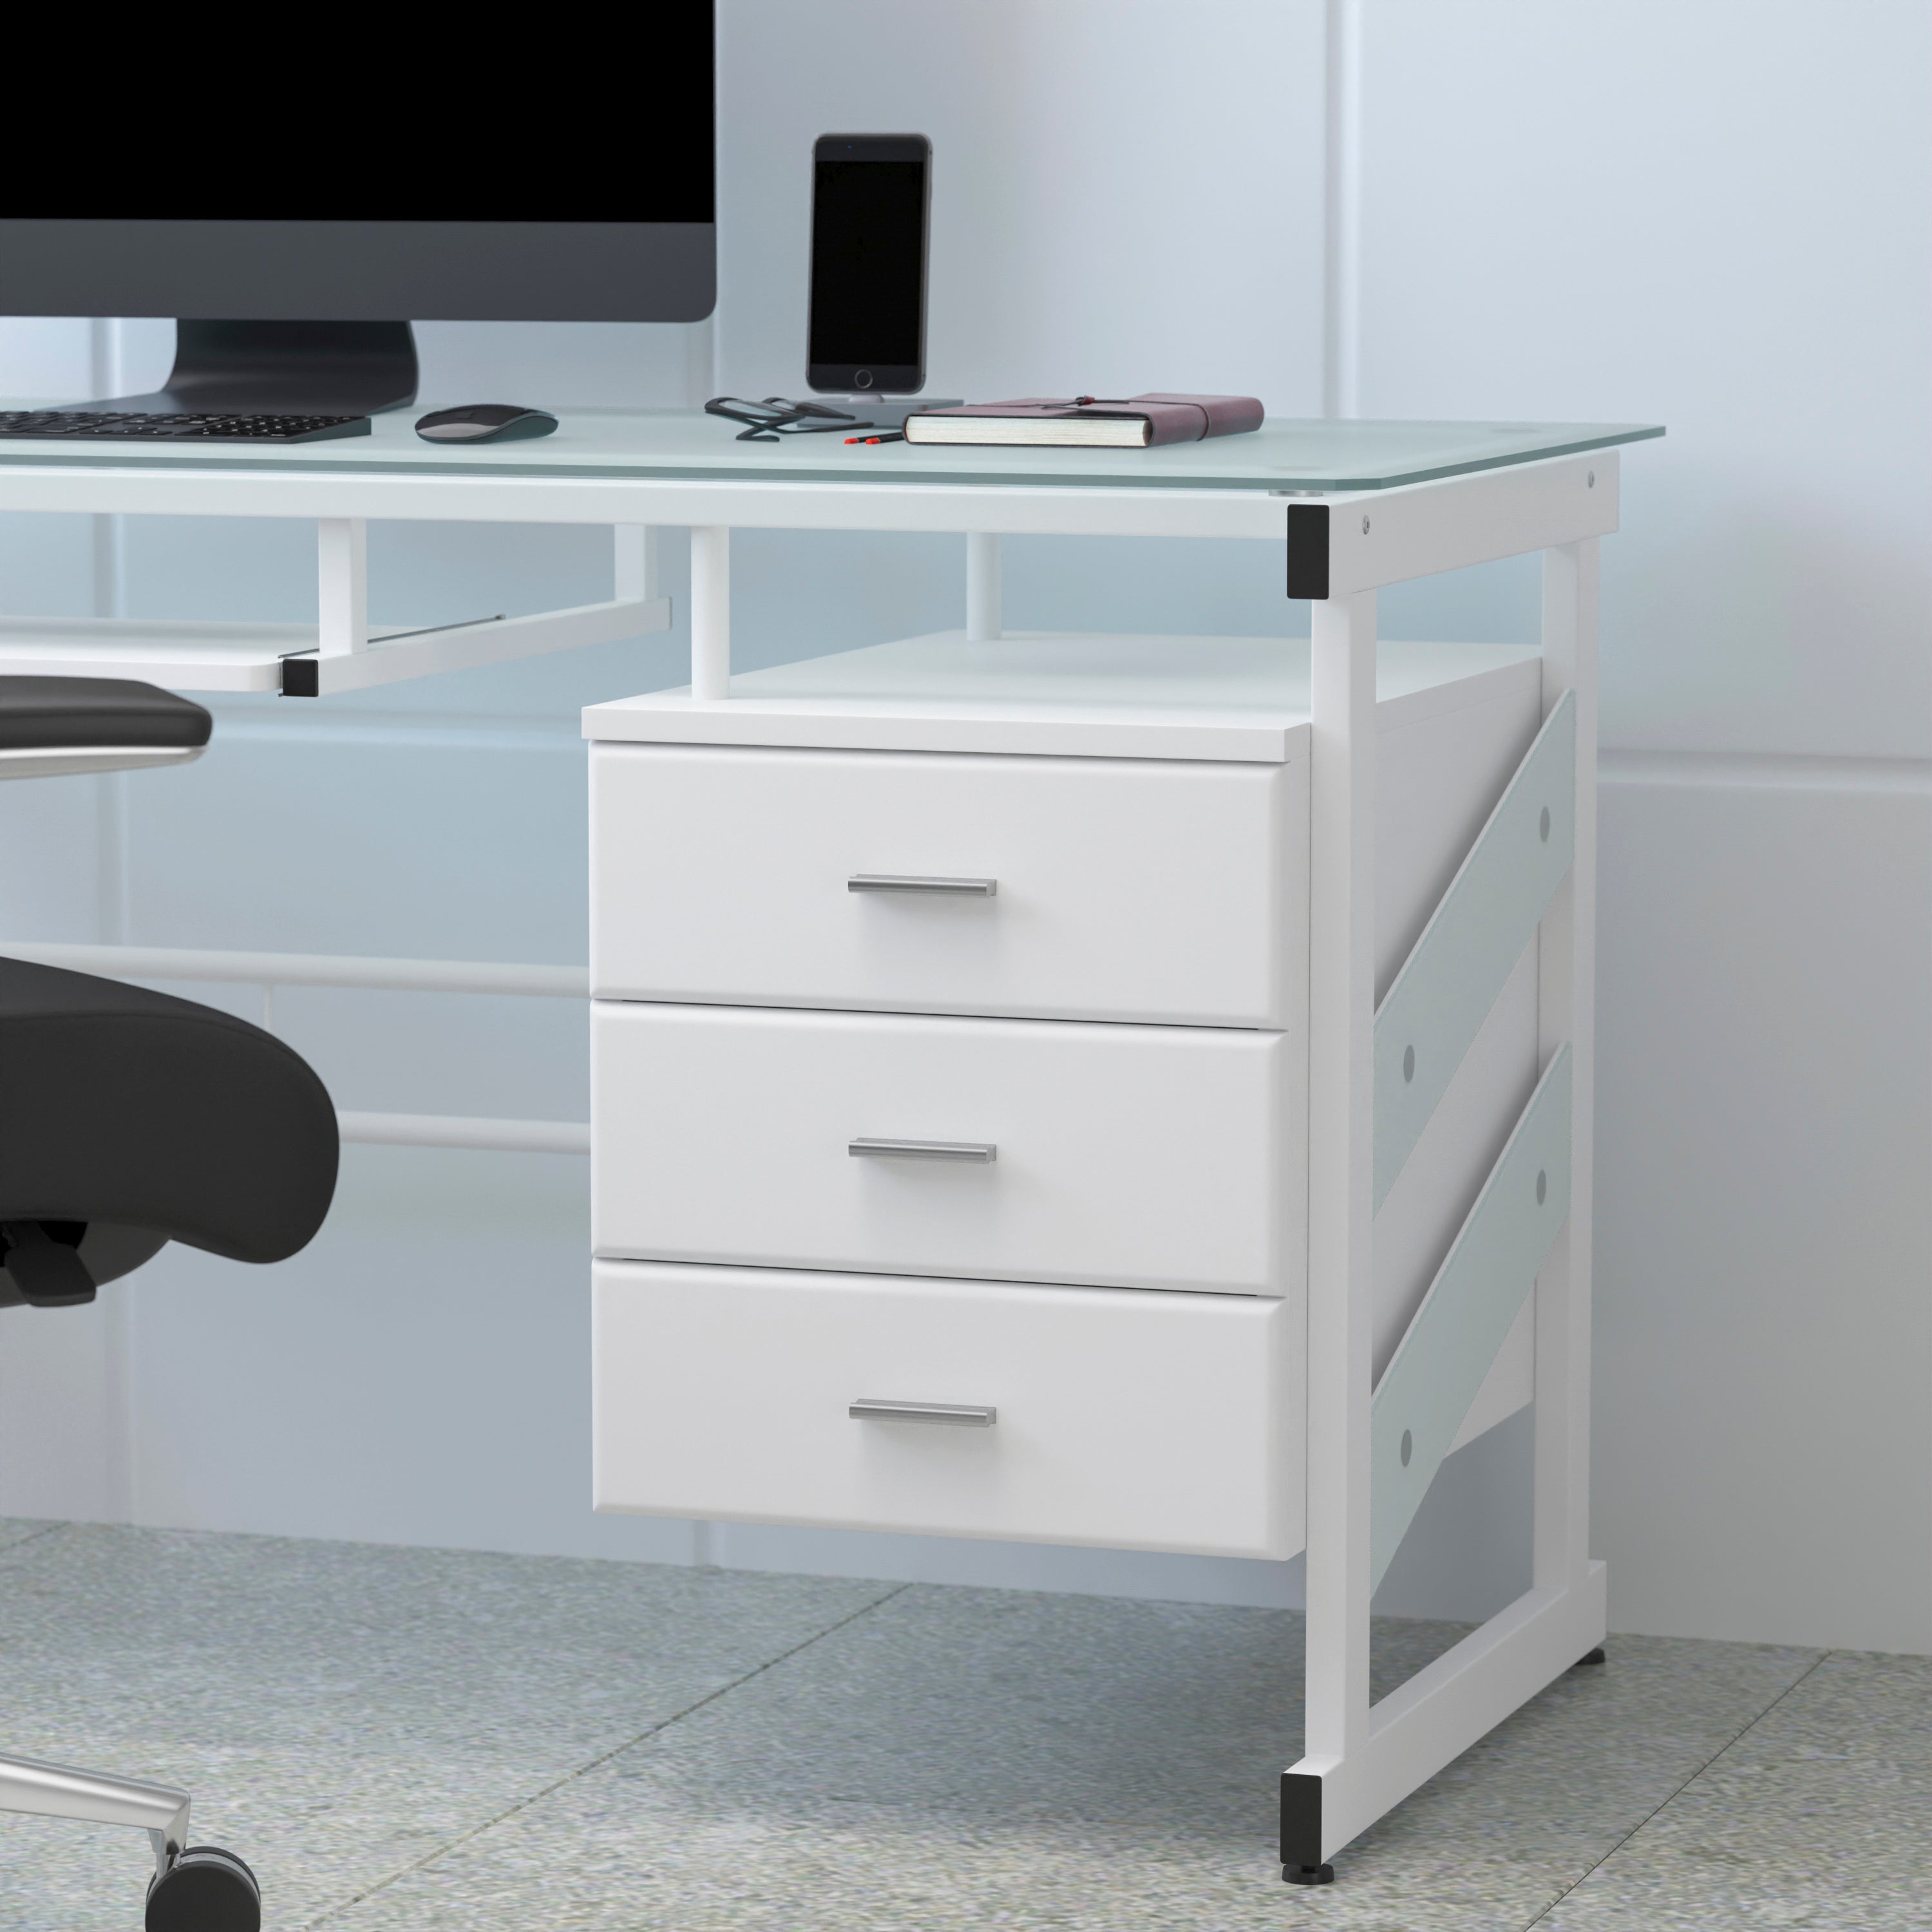 Computer Desk with Three Drawer Pedestal-Desk-Flash Furniture-Wall2Wall Furnishings